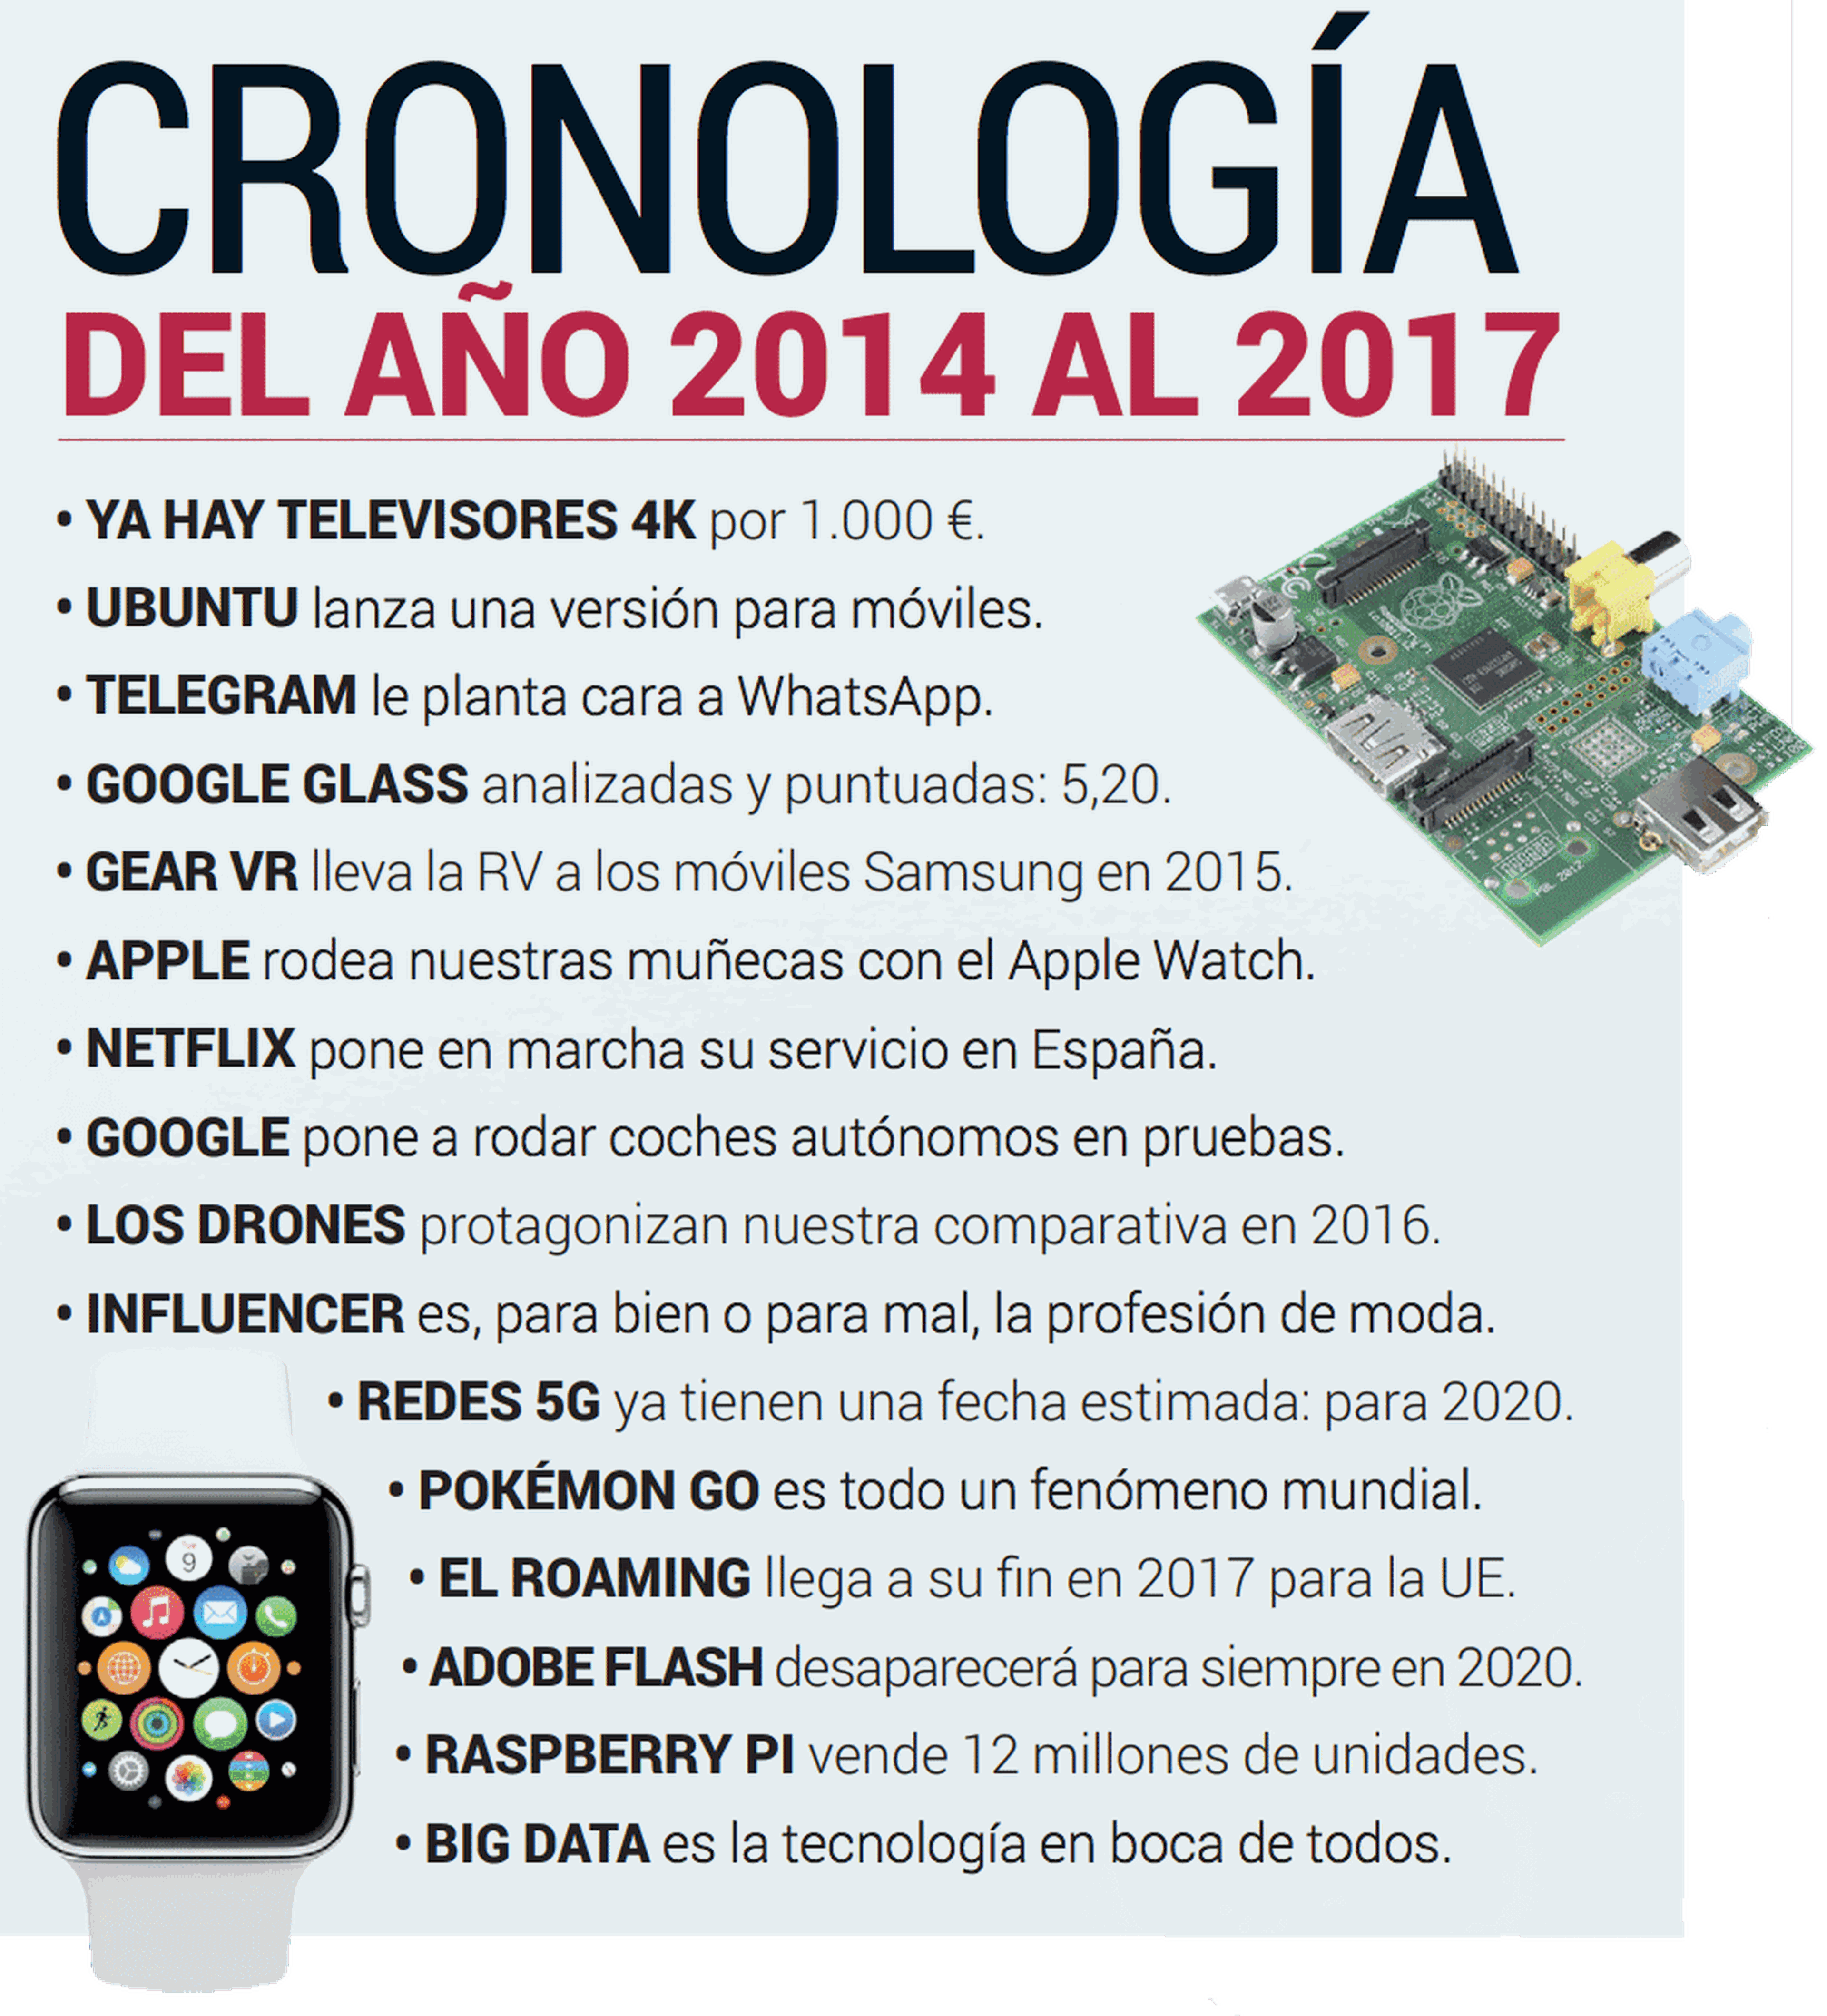 Cronologia revista computerhoy 2014